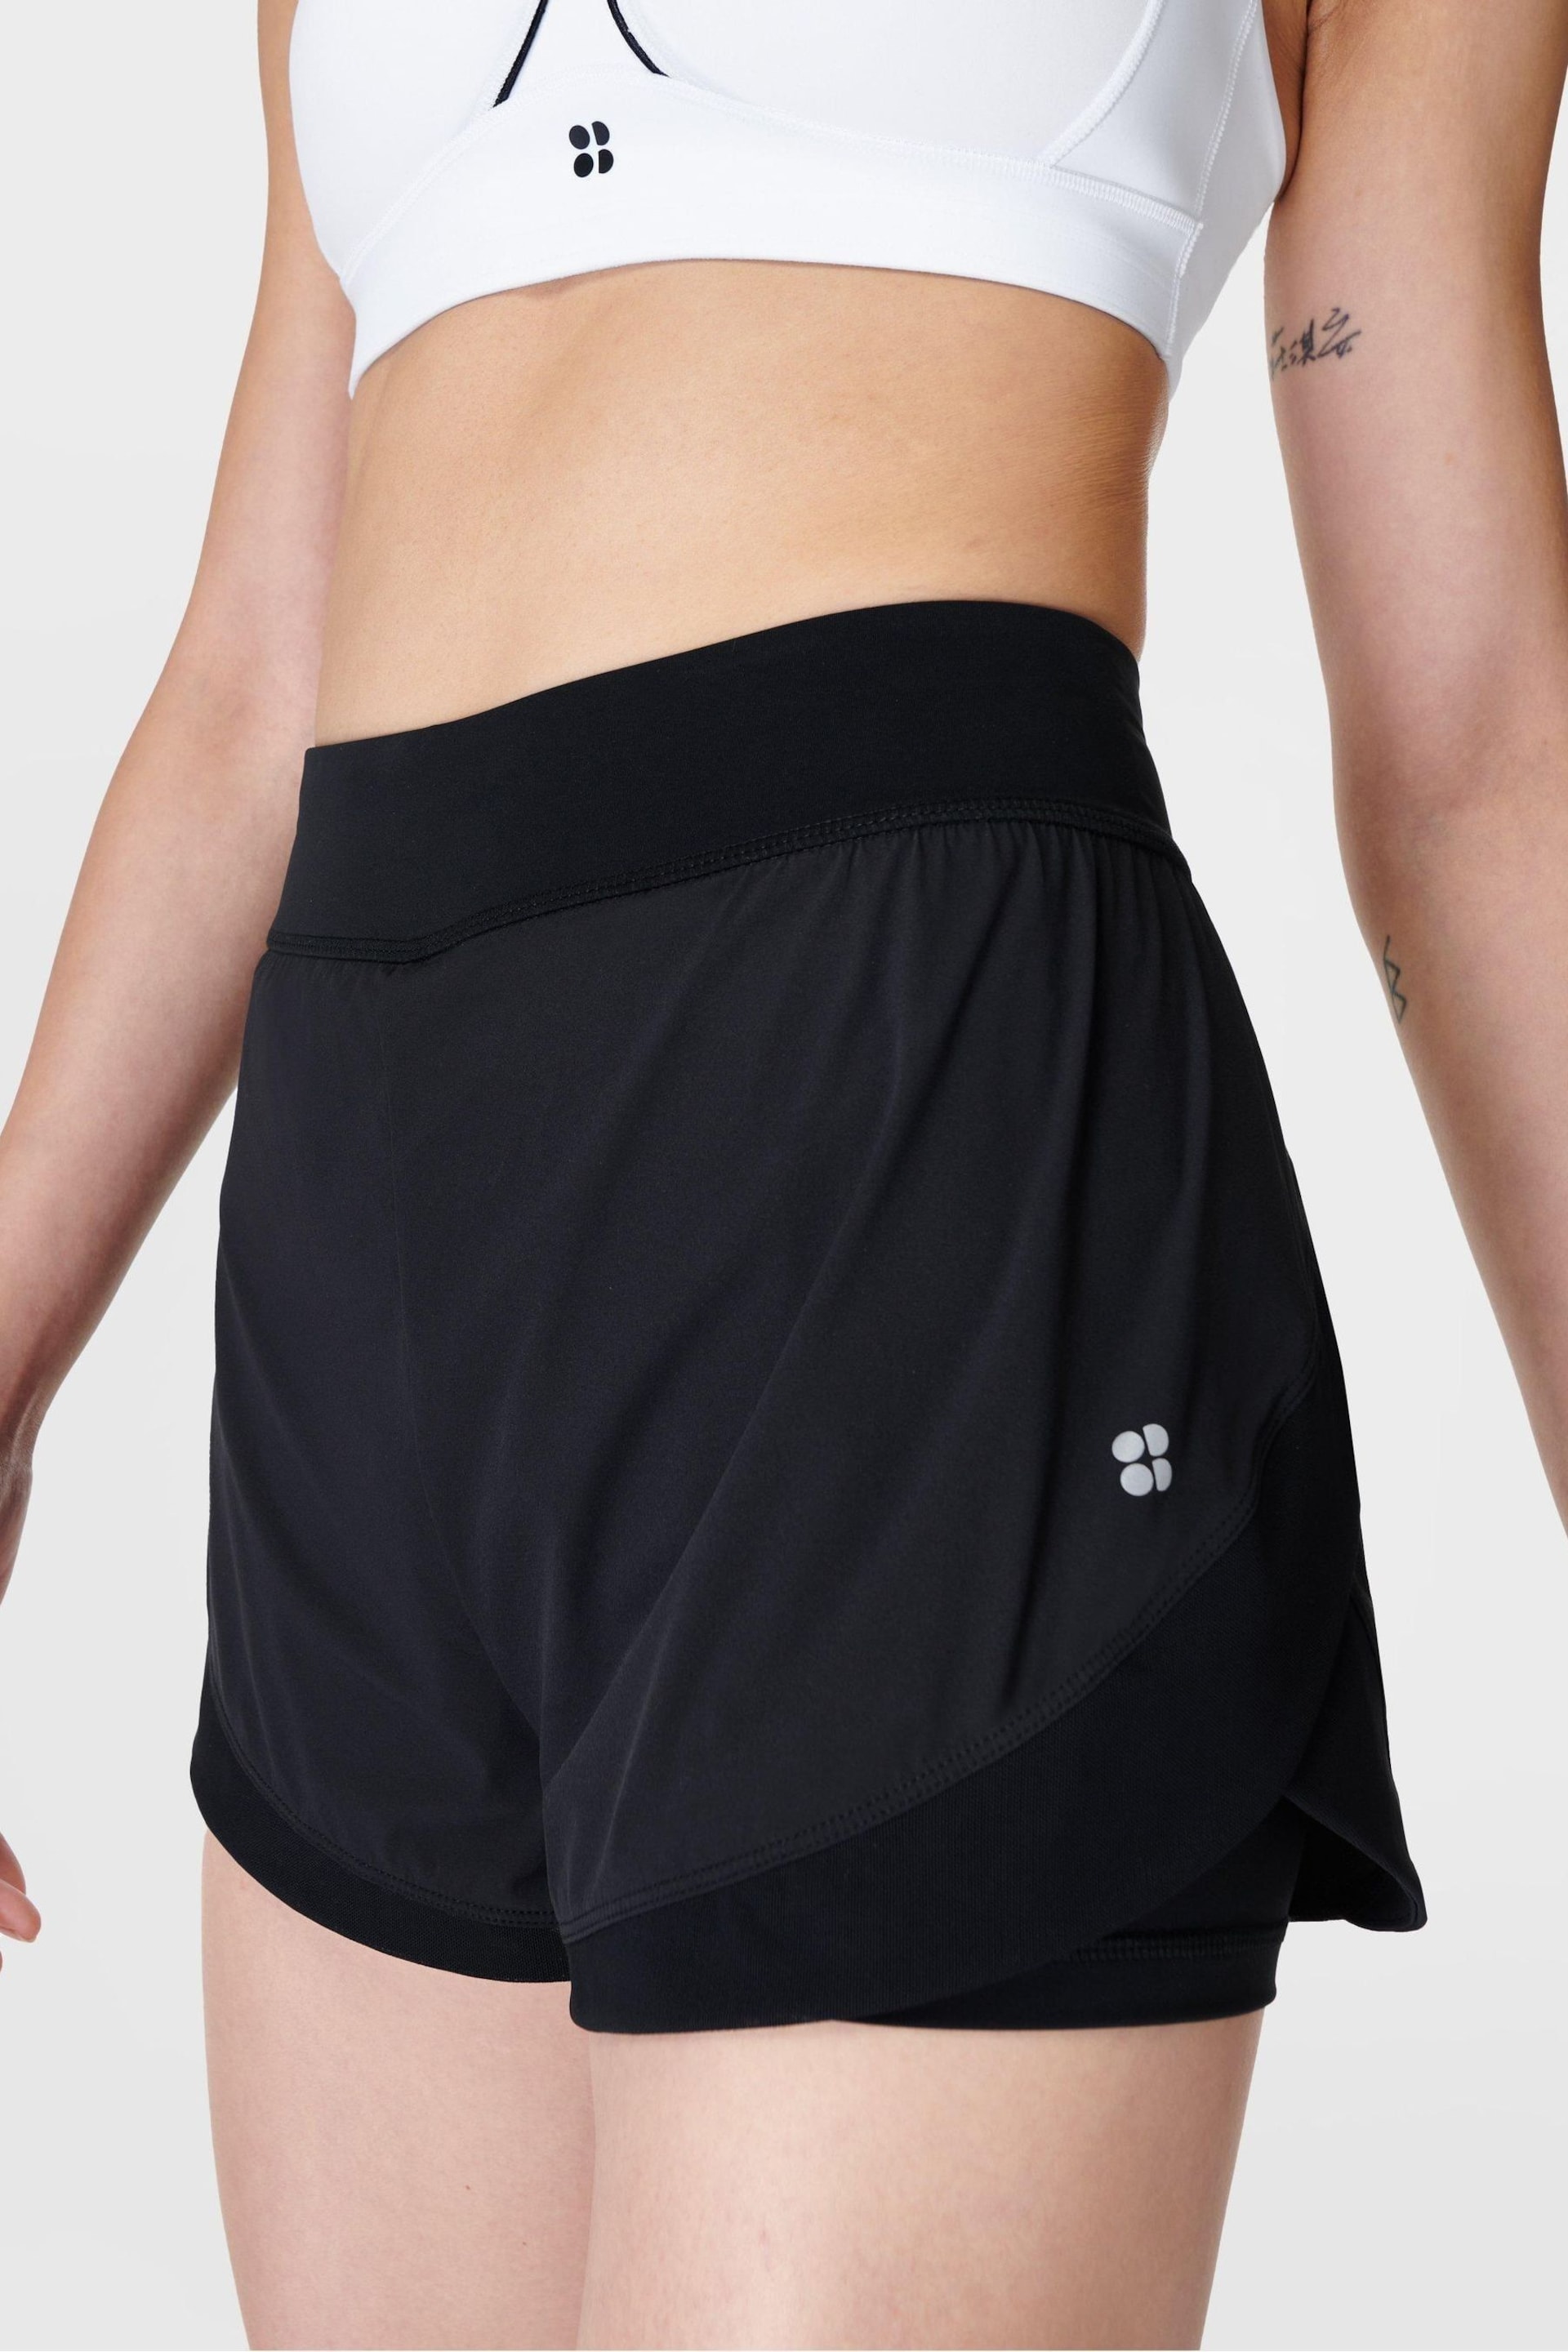 Sweaty Betty Black Tempo Run Shorts - Image 7 of 8